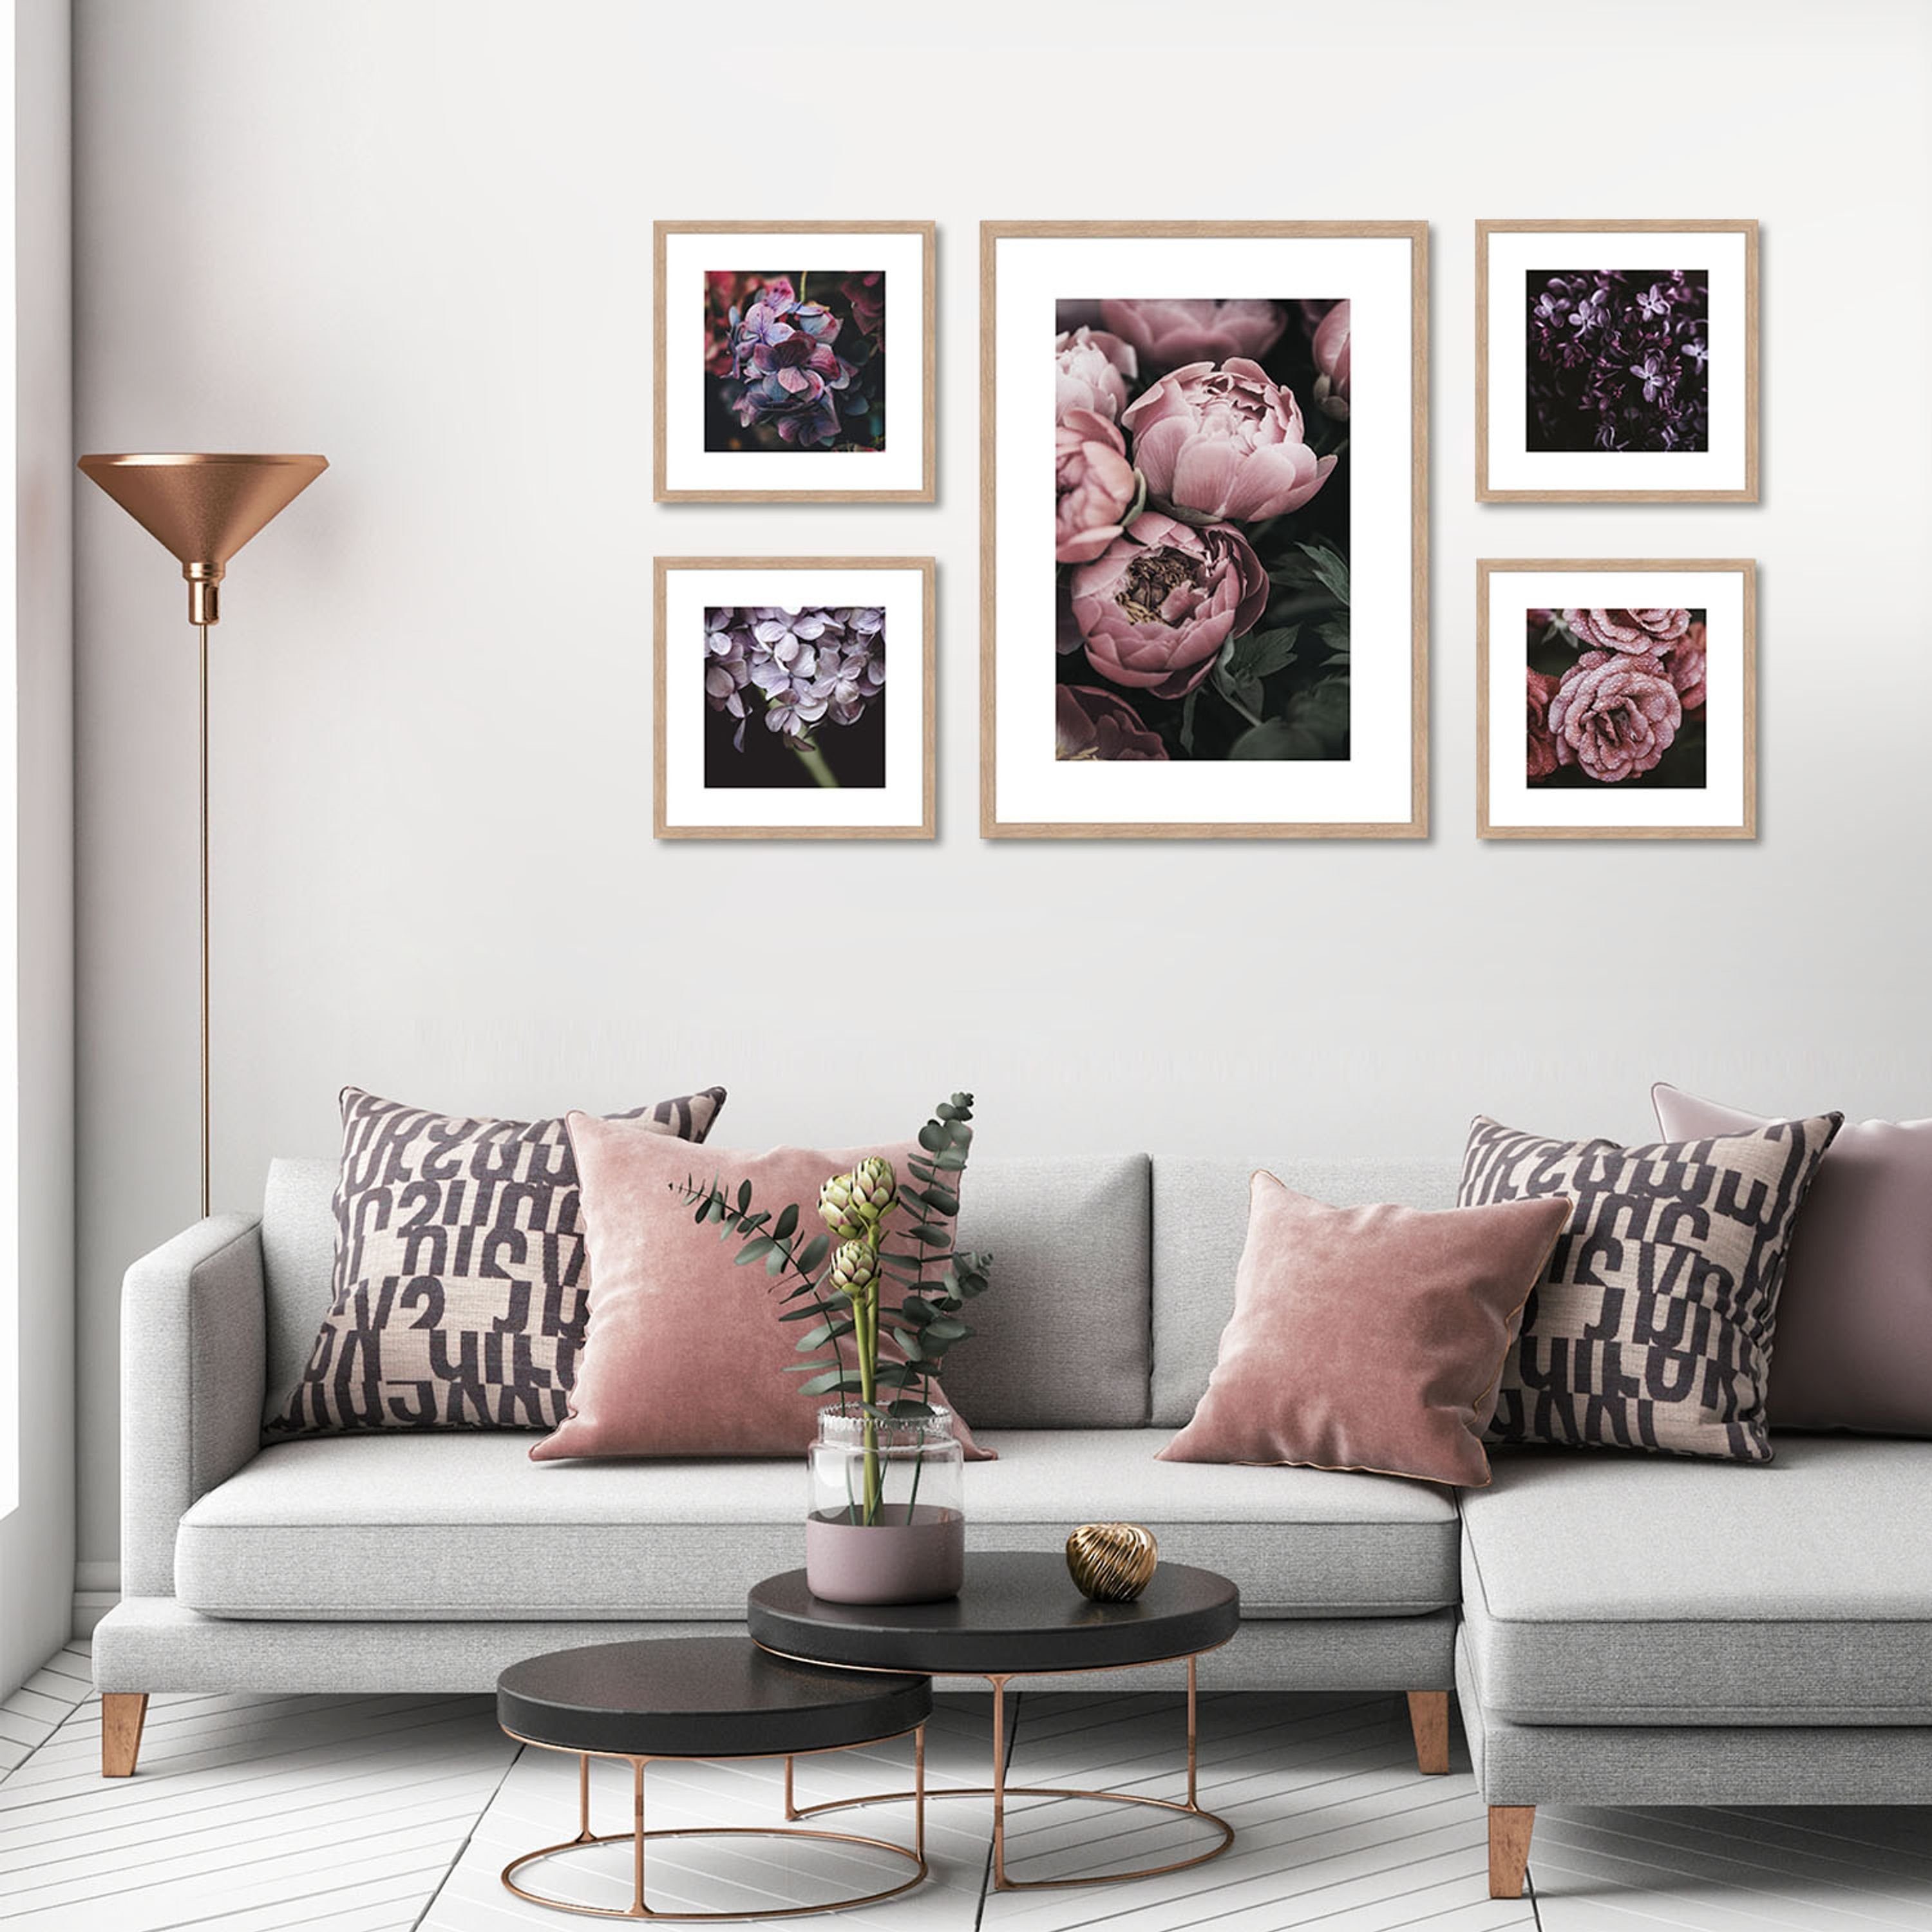 inkl. artissimo Holz-Rahmen / Wandbild, II Bild 30x30cm Lila Rahmen gerahmt Blumen: / mit Design-Poster Bild Blüten